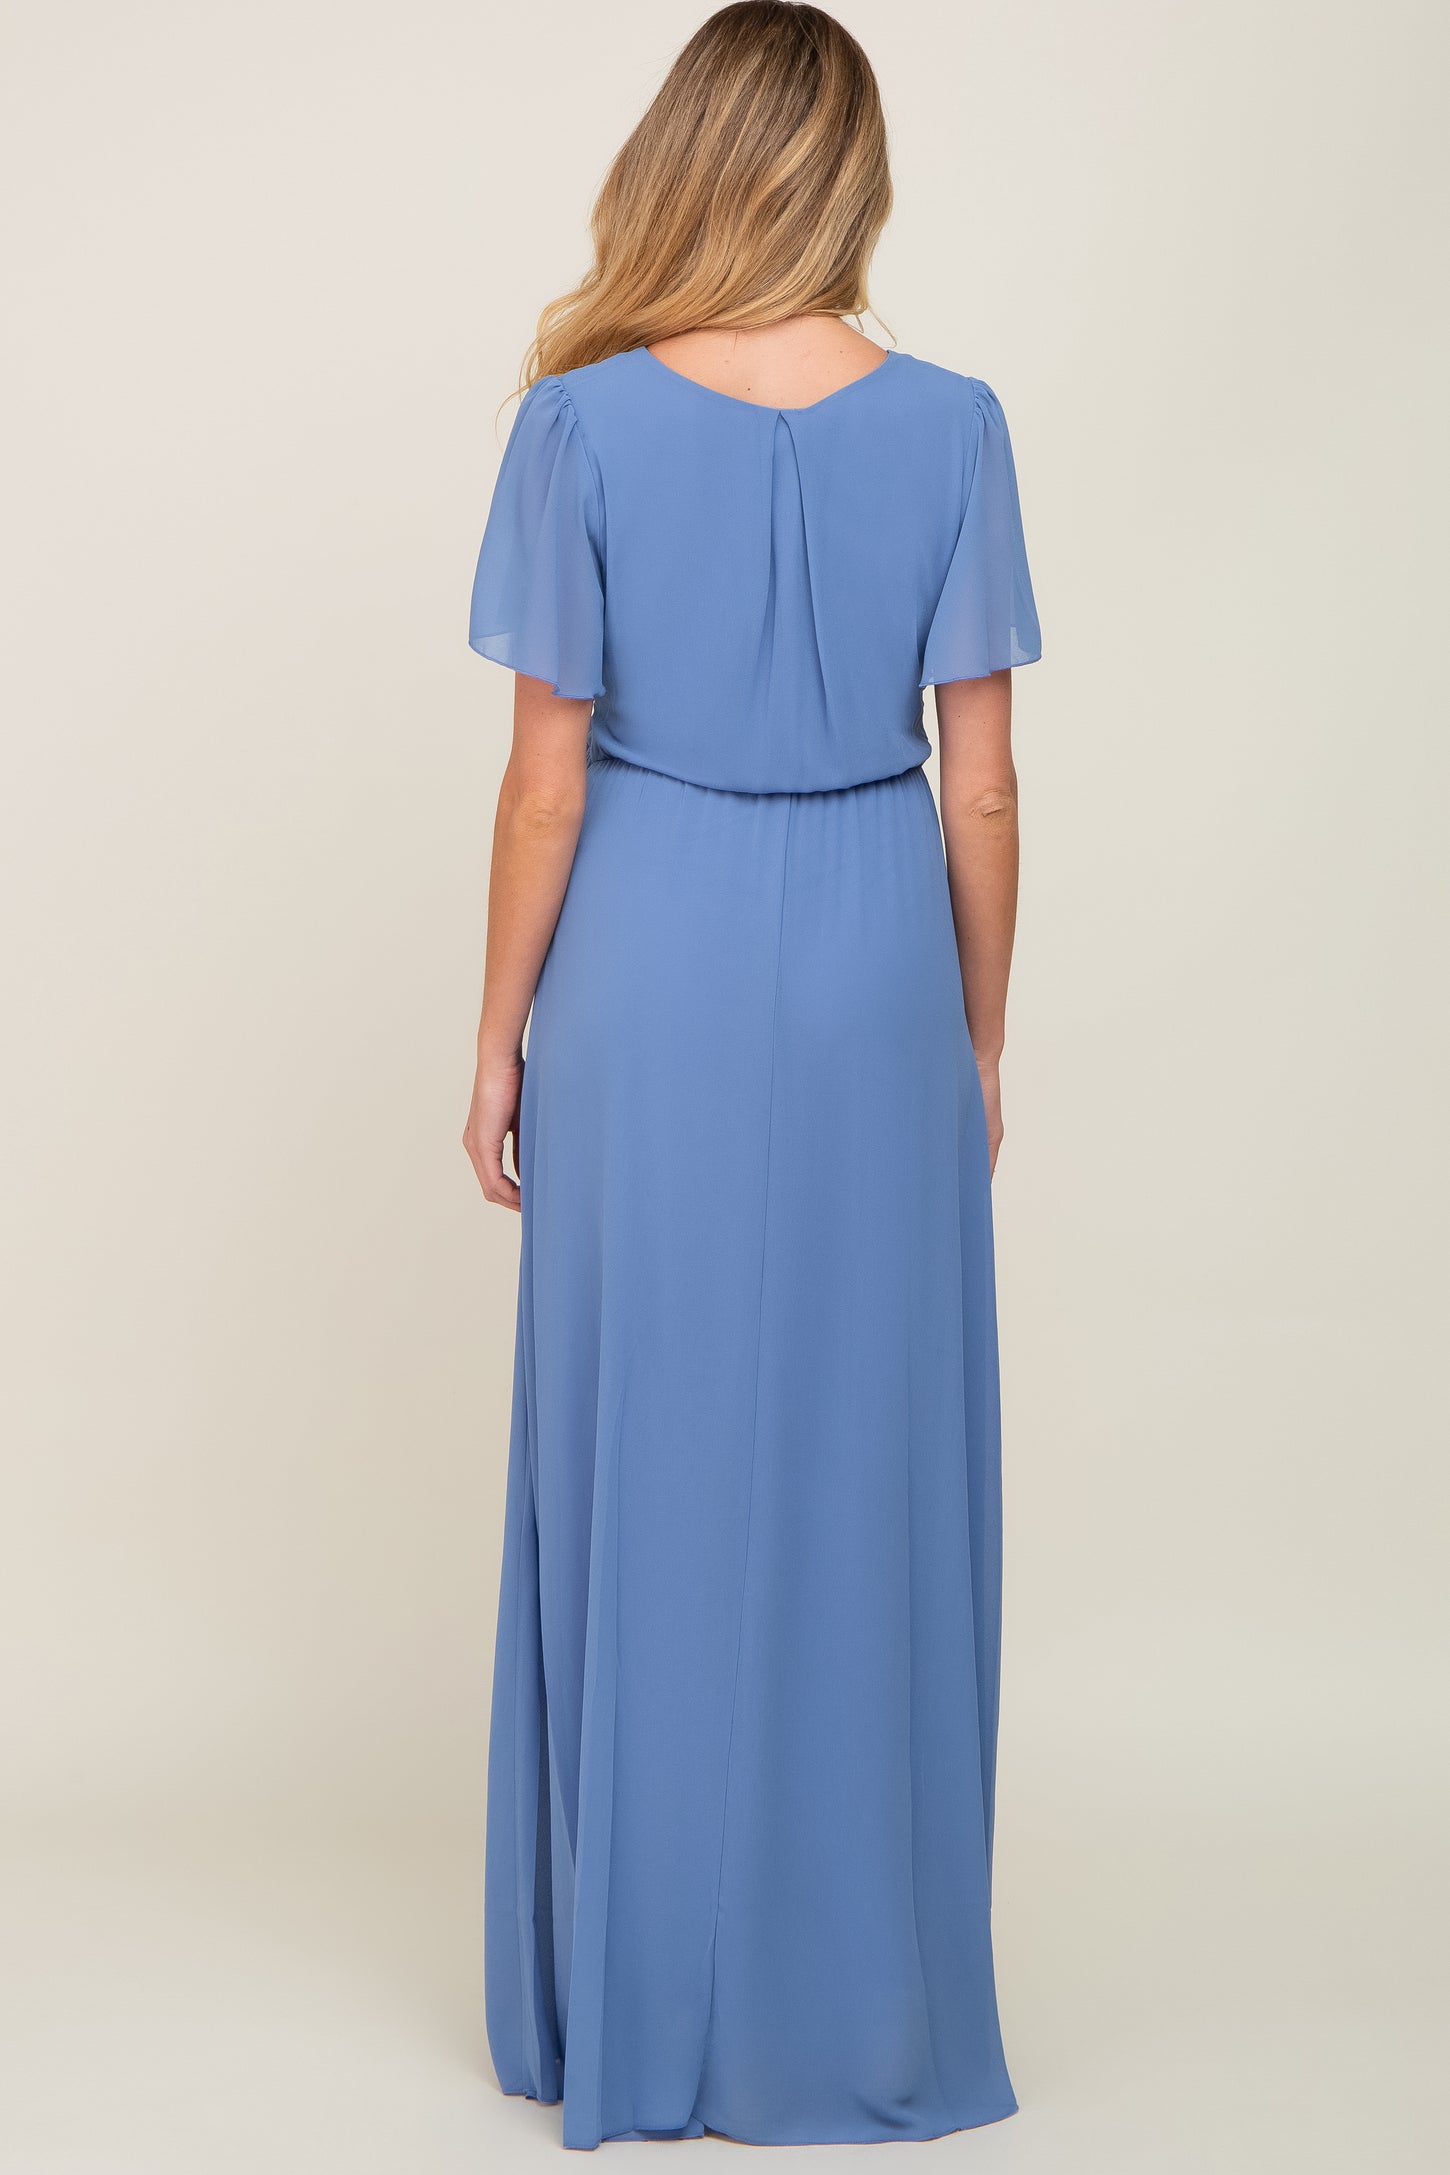 Blue Chiffon Short Sleeve Wrap V-Neck Front Slit Maternity Maxi Dress ...